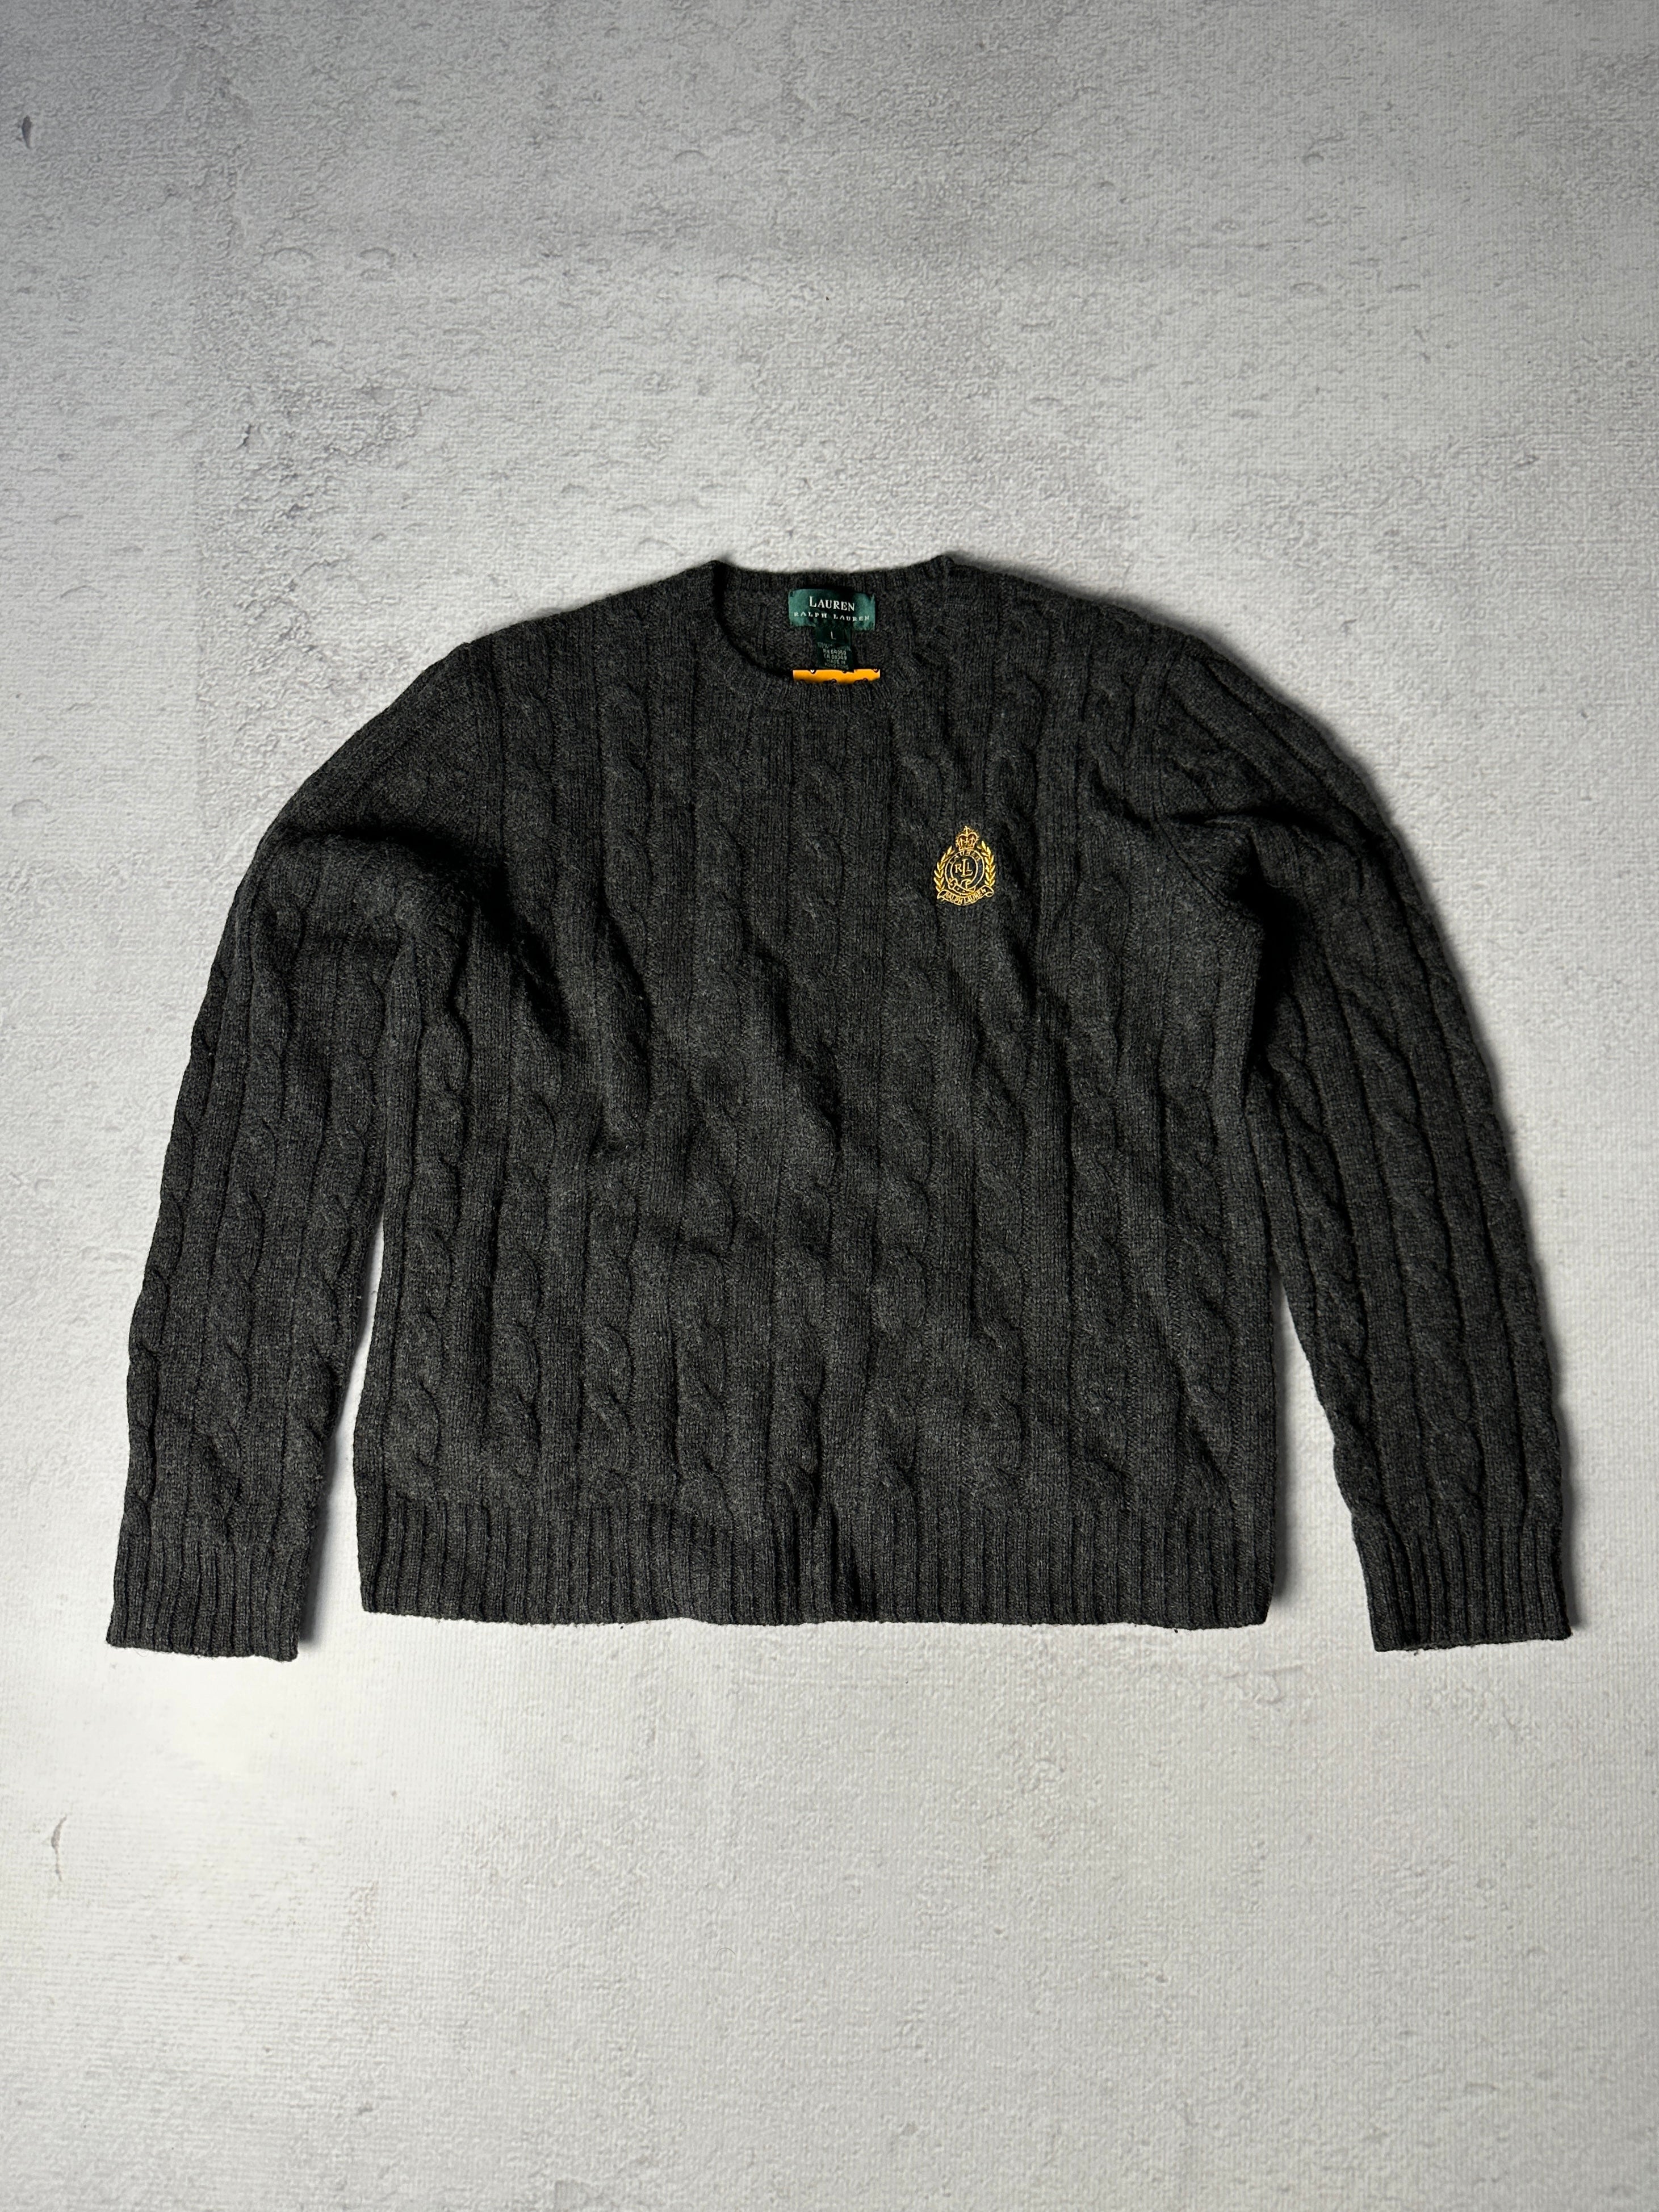 Vintage Polo Ralph Lauren Knitted Sweater - Women's Medium